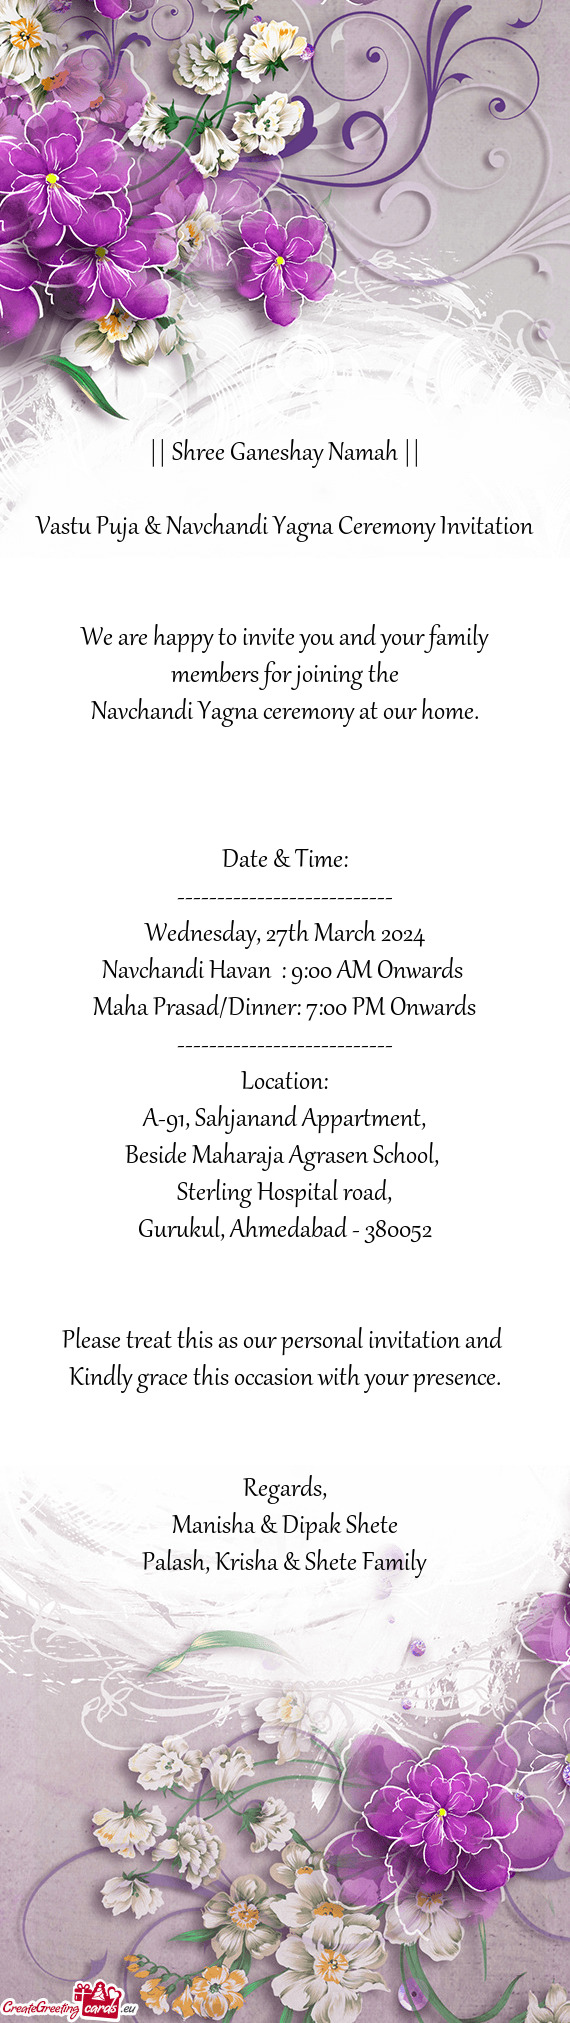 Maha Prasad/Dinner: 7:00 PM Onwards